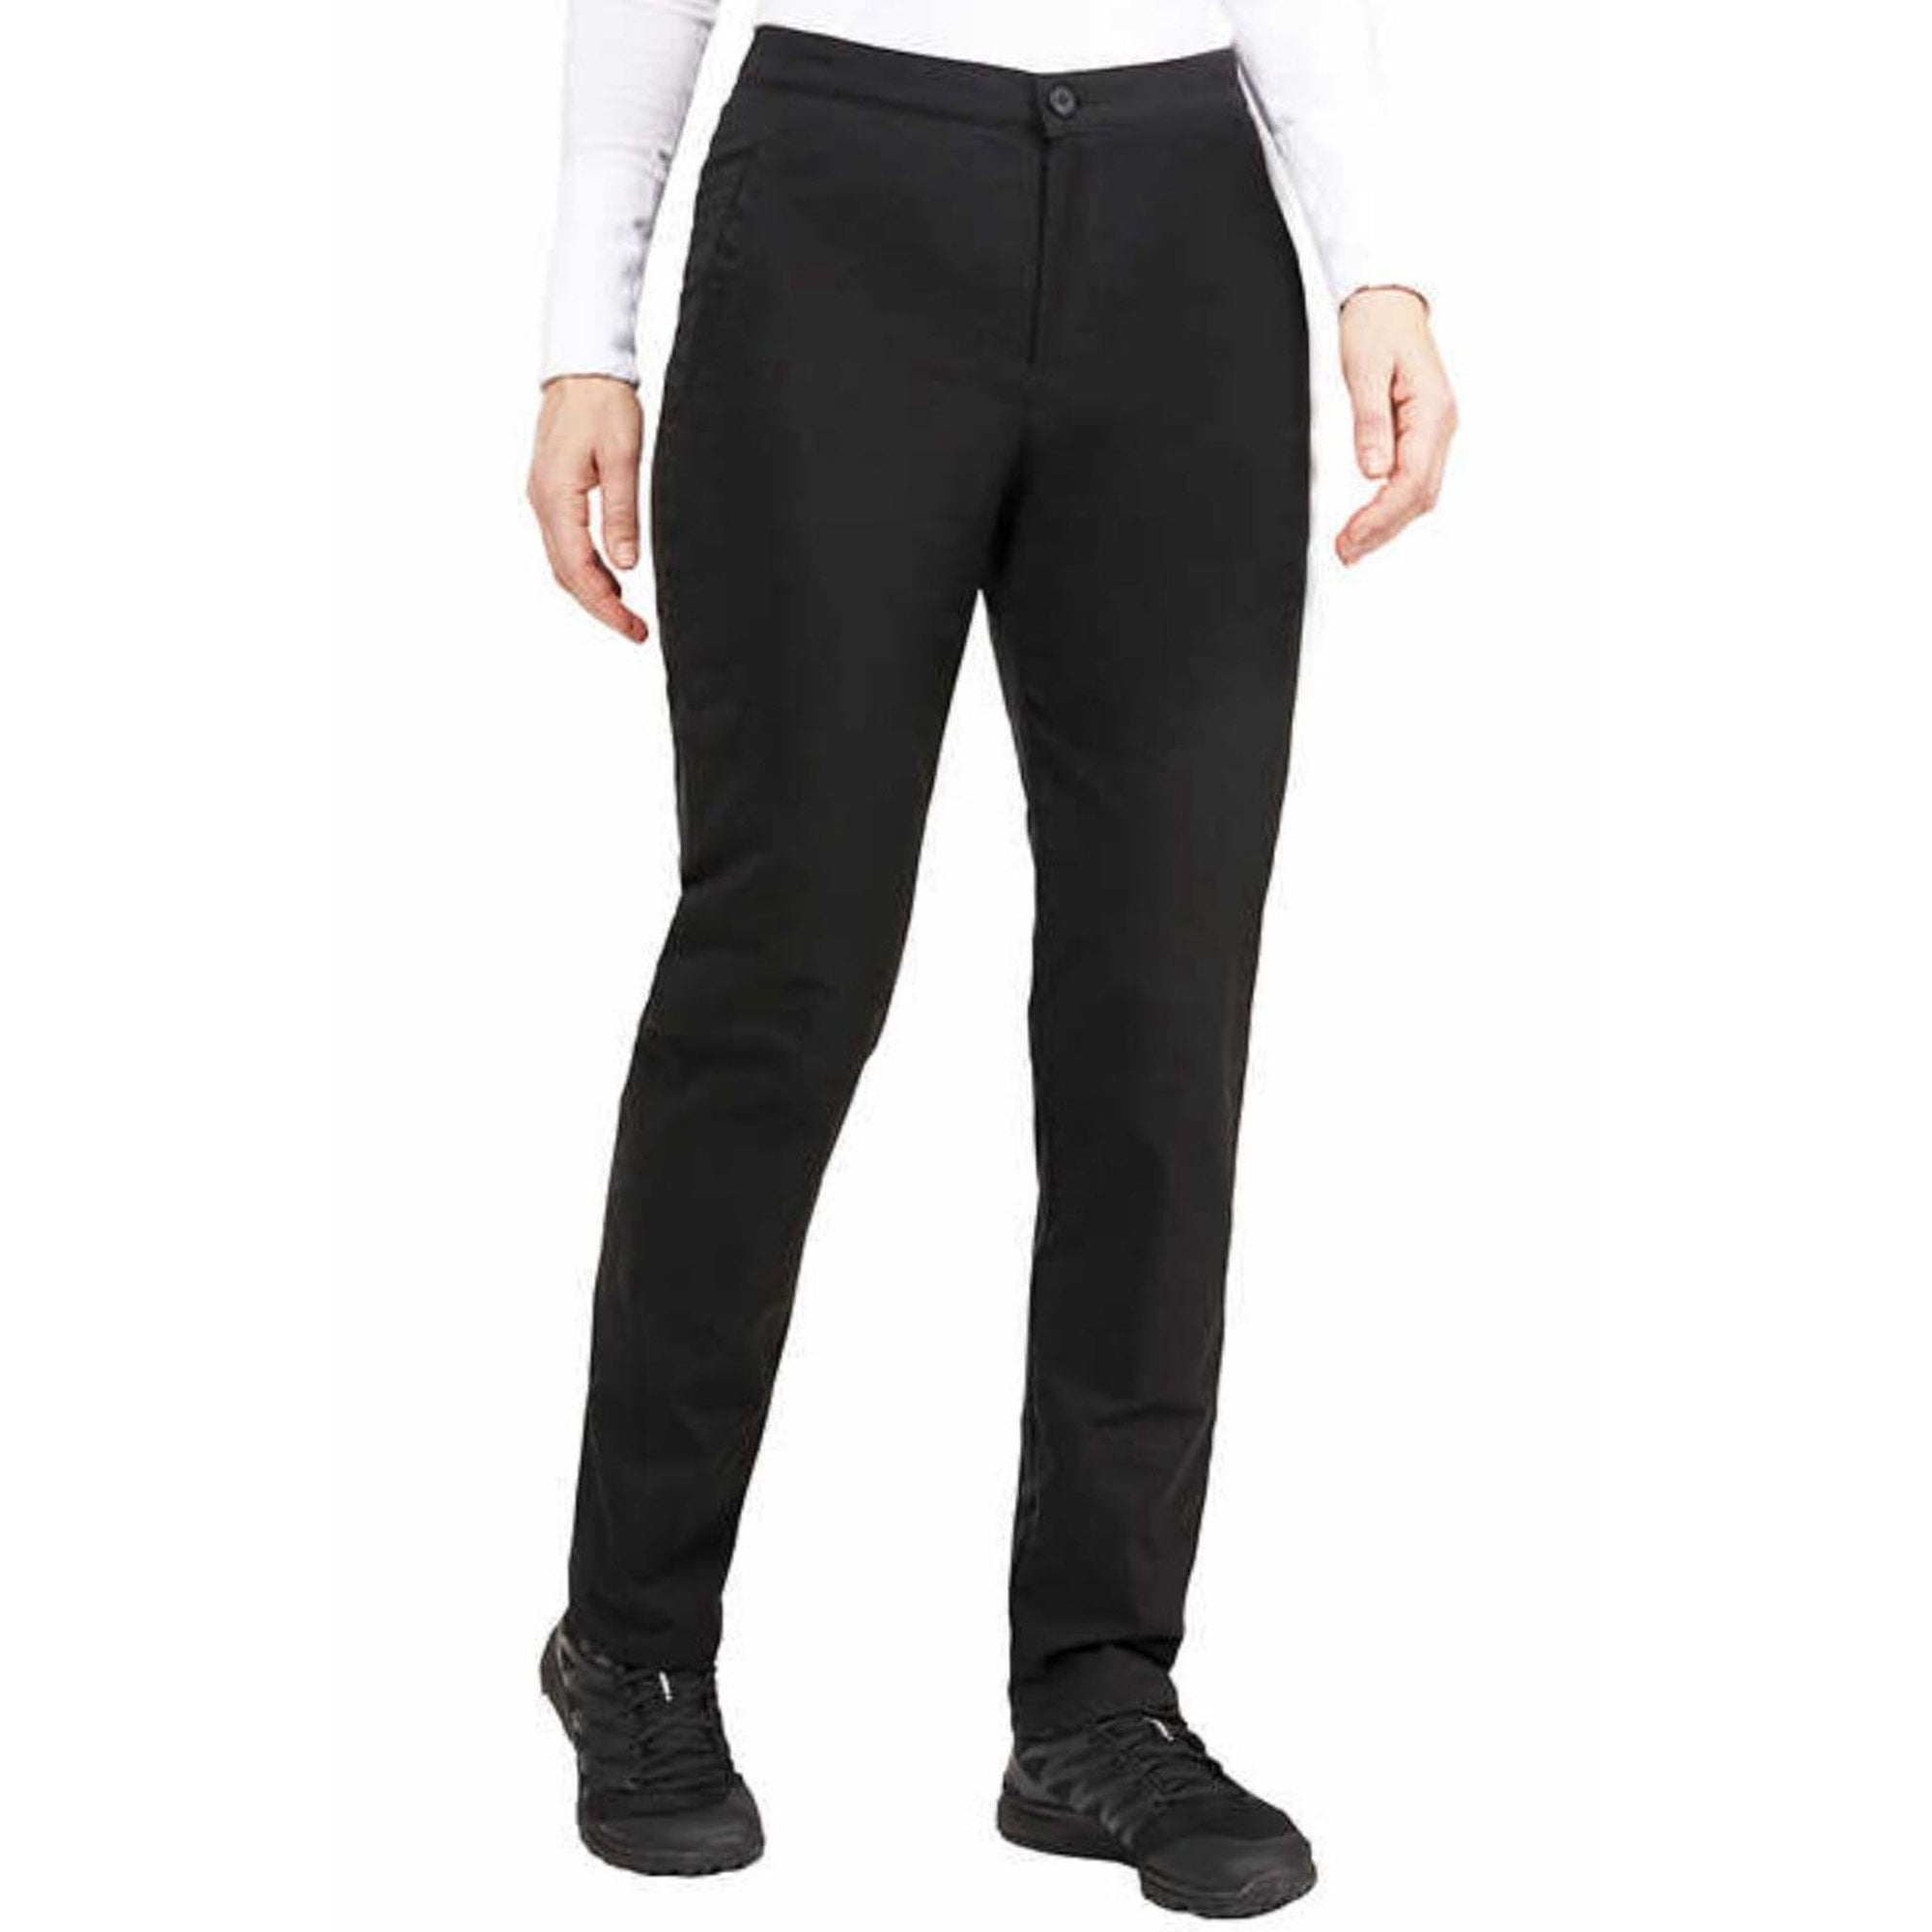 Stormpack Womens Fleece Lined Pant Black XL 